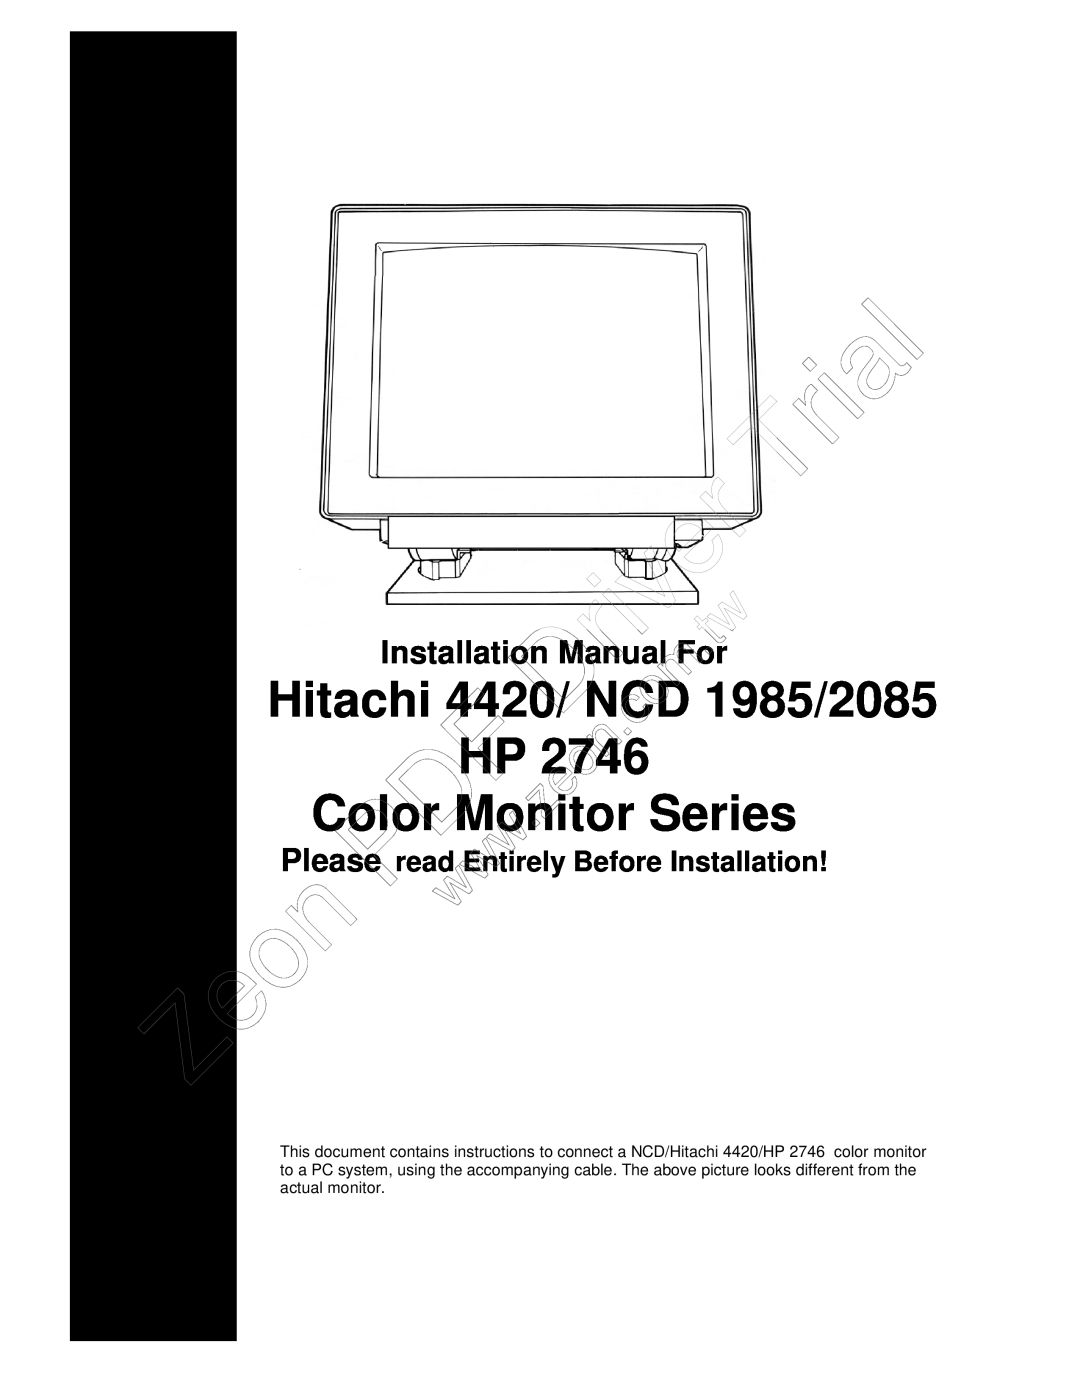 Hitachi installation manual Trial, Driver, Zeon, Hitachi 4420/ NCD 1985/2085, Installation Manual For 